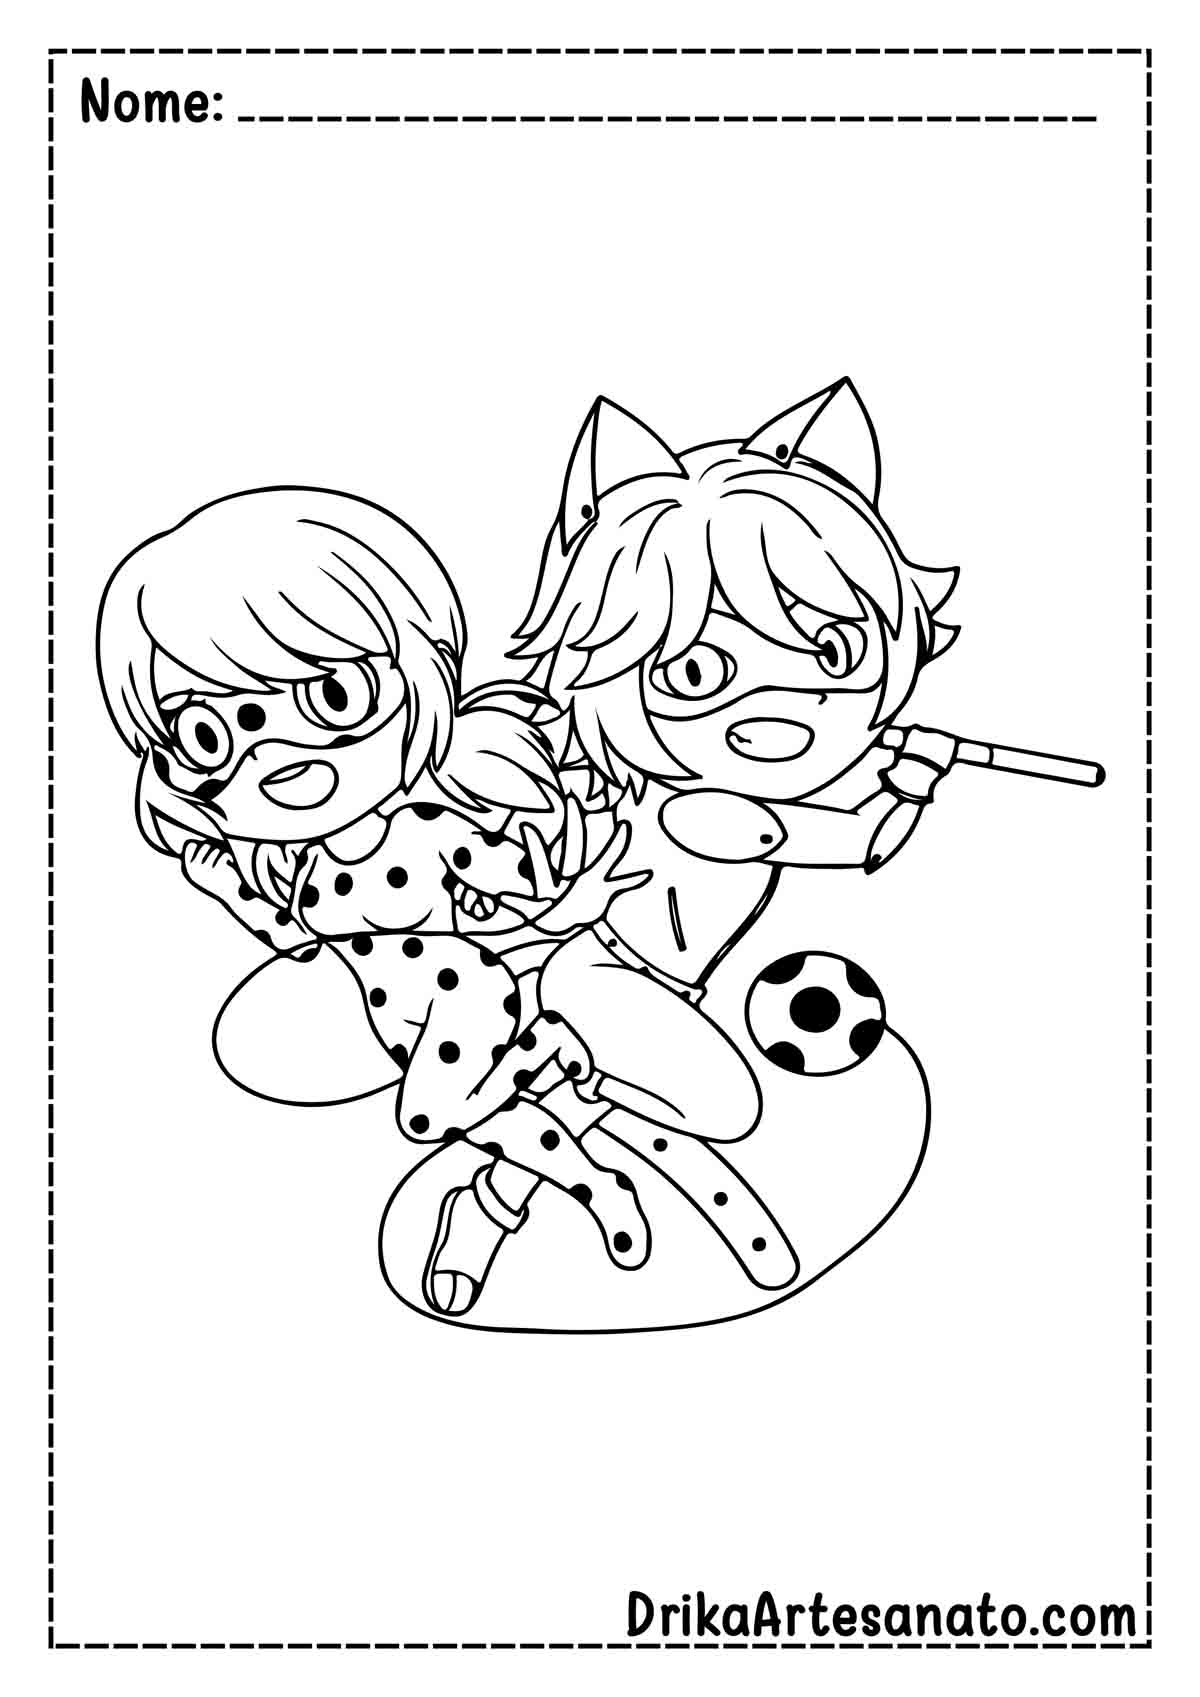 Desenho da Ladybug Infantil para Colorir